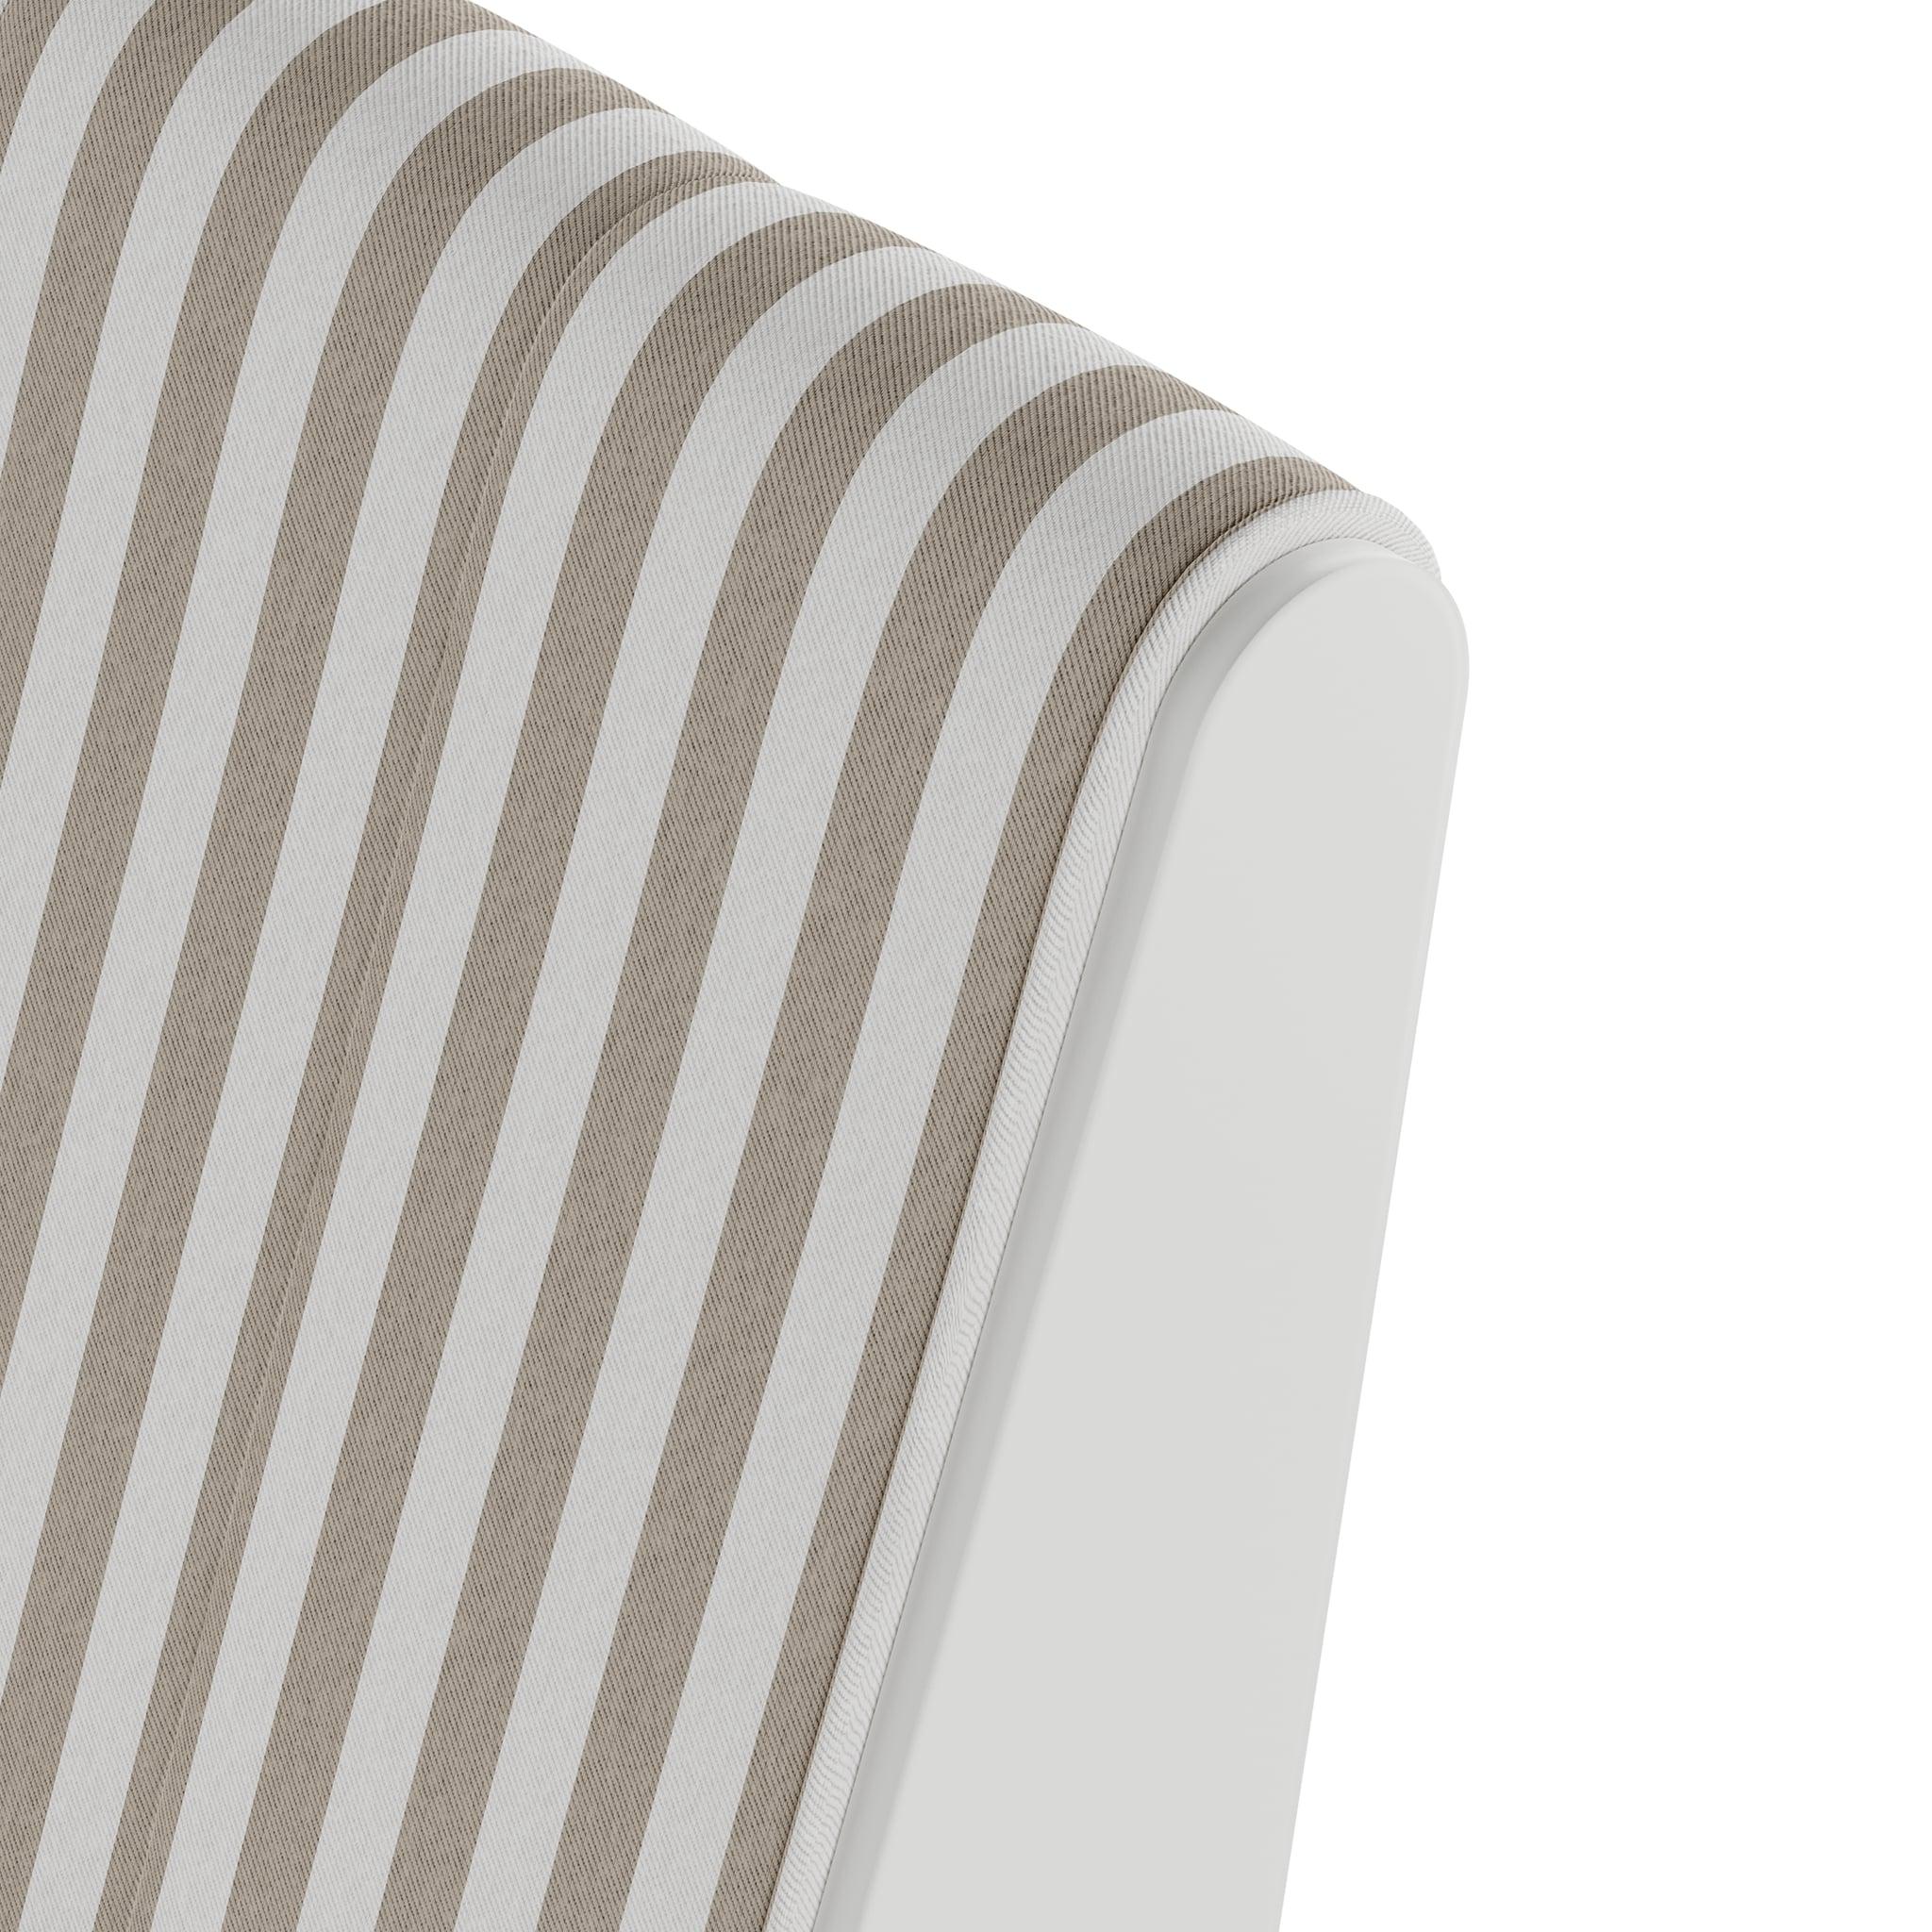 Modern Outdoor Folding Sun Lounge Chair Beige White Stripes & Golden Details For Sale 1